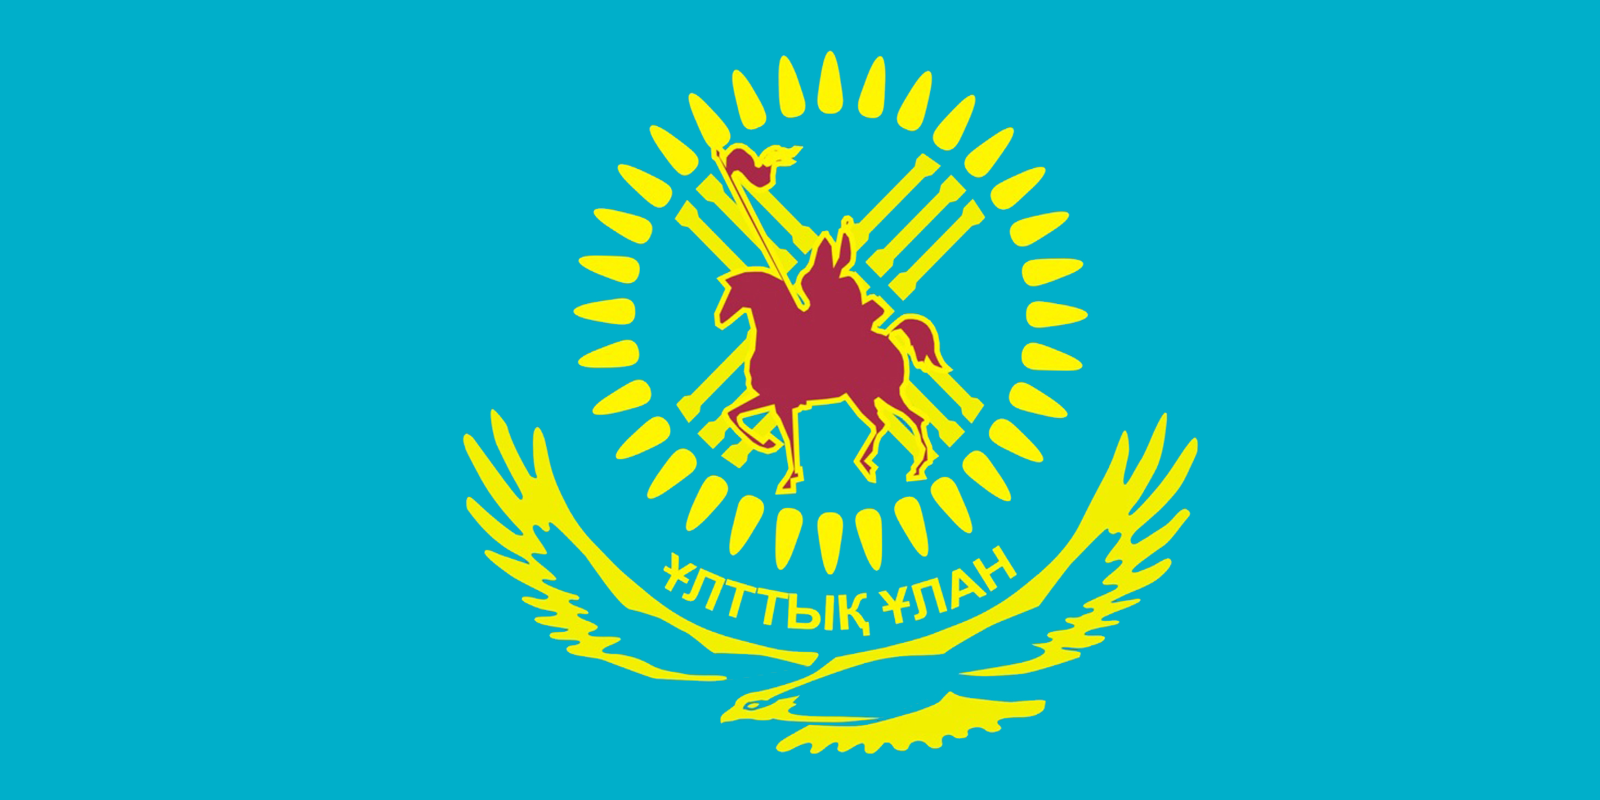 Национальная гвардия Казахстана эмблема